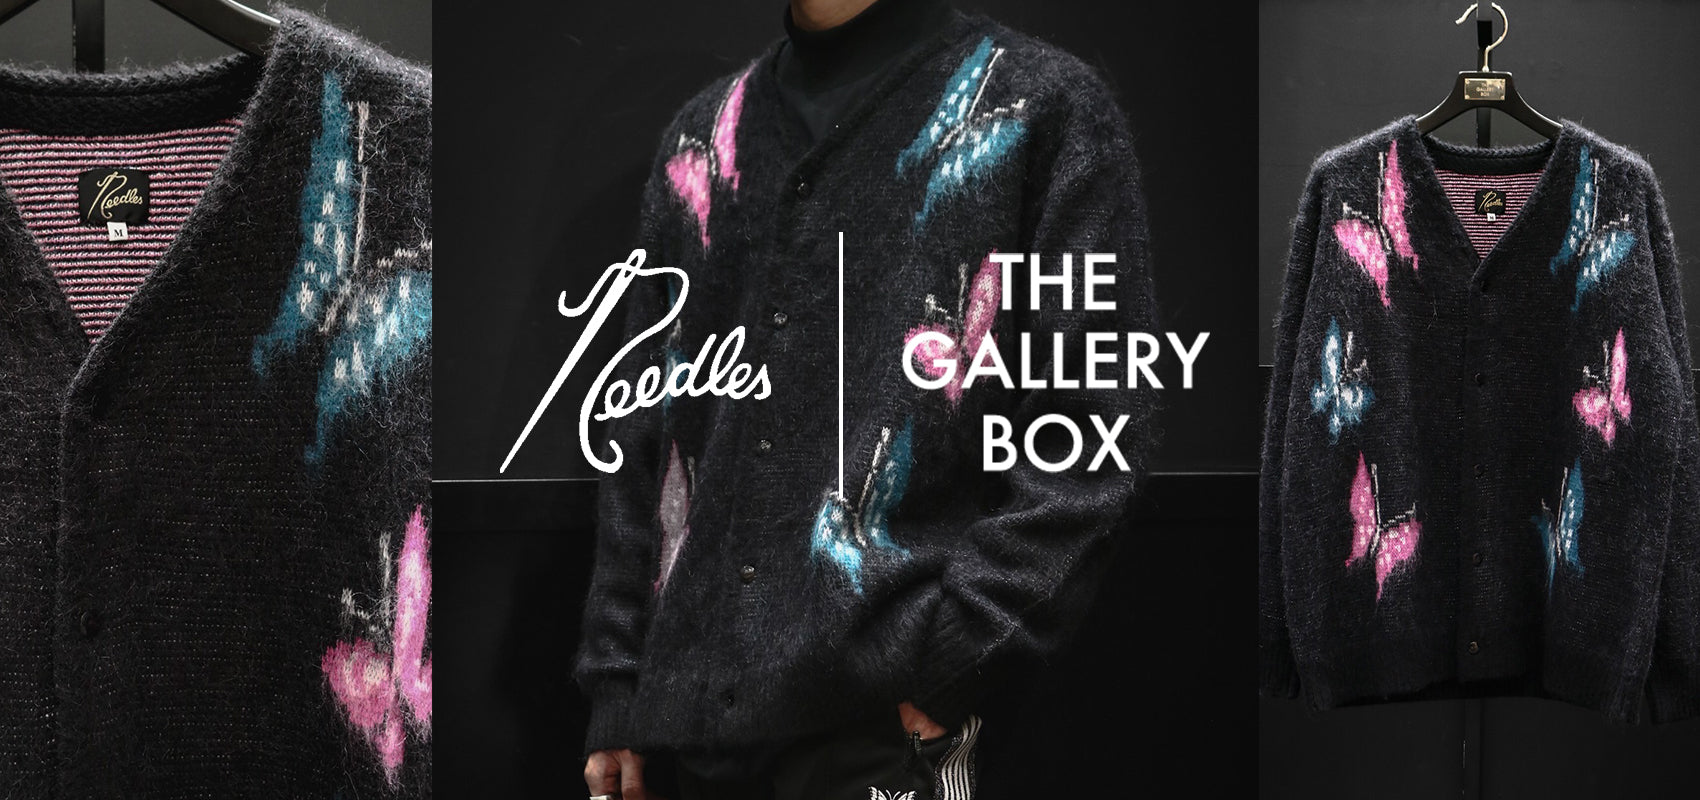 NEEDLES × THE GALLERY BOX EXCLUSIVE ITEM 発売開始